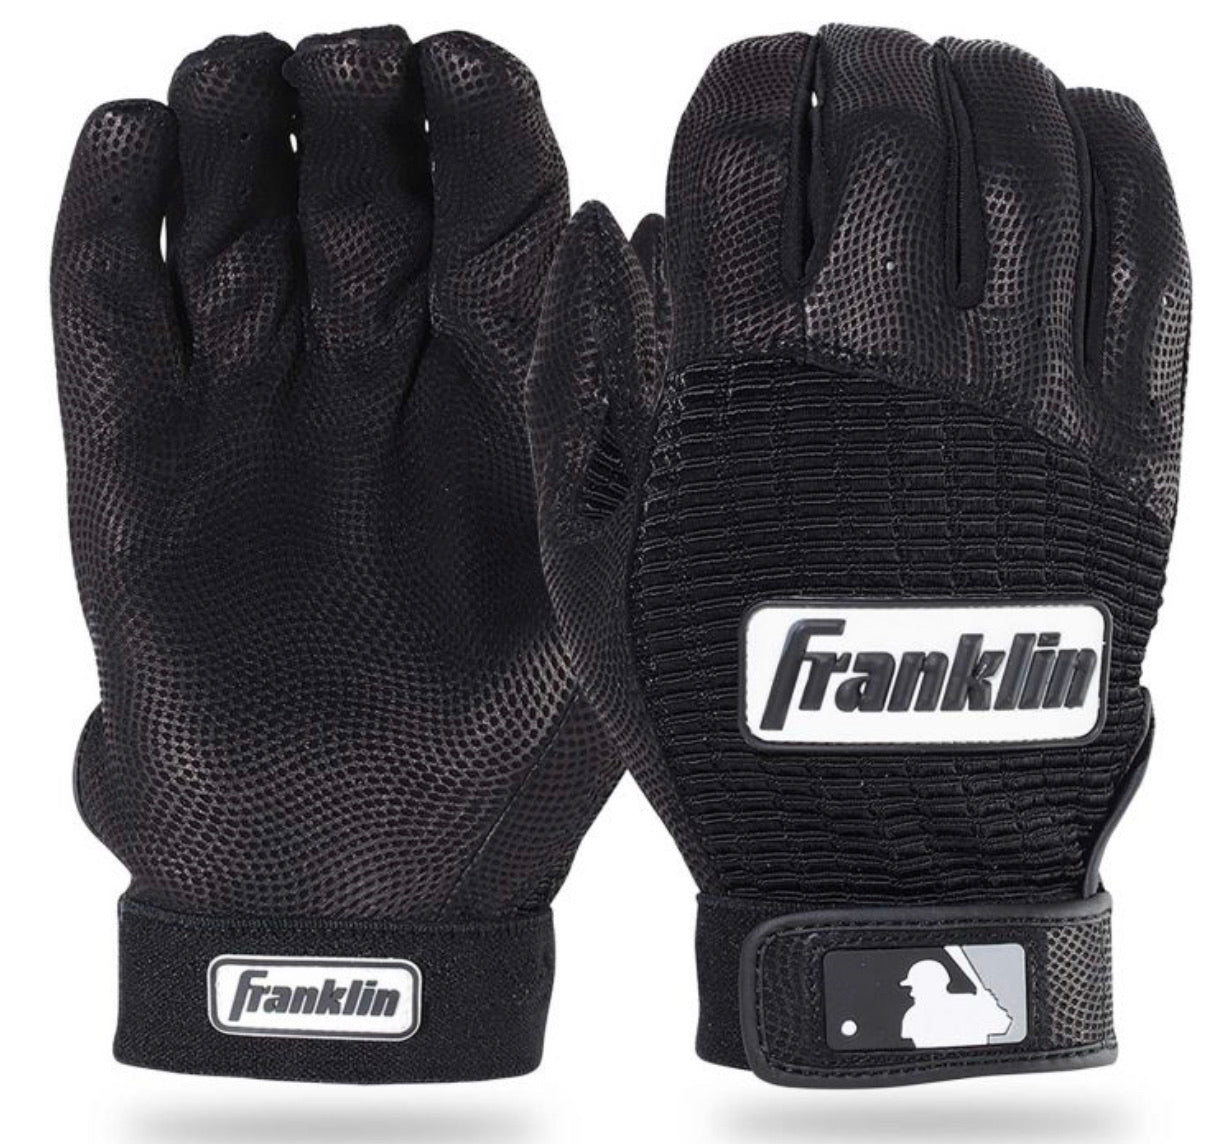 Pro Classic Batting Gloves by Franklin - AtlanticCoastSports